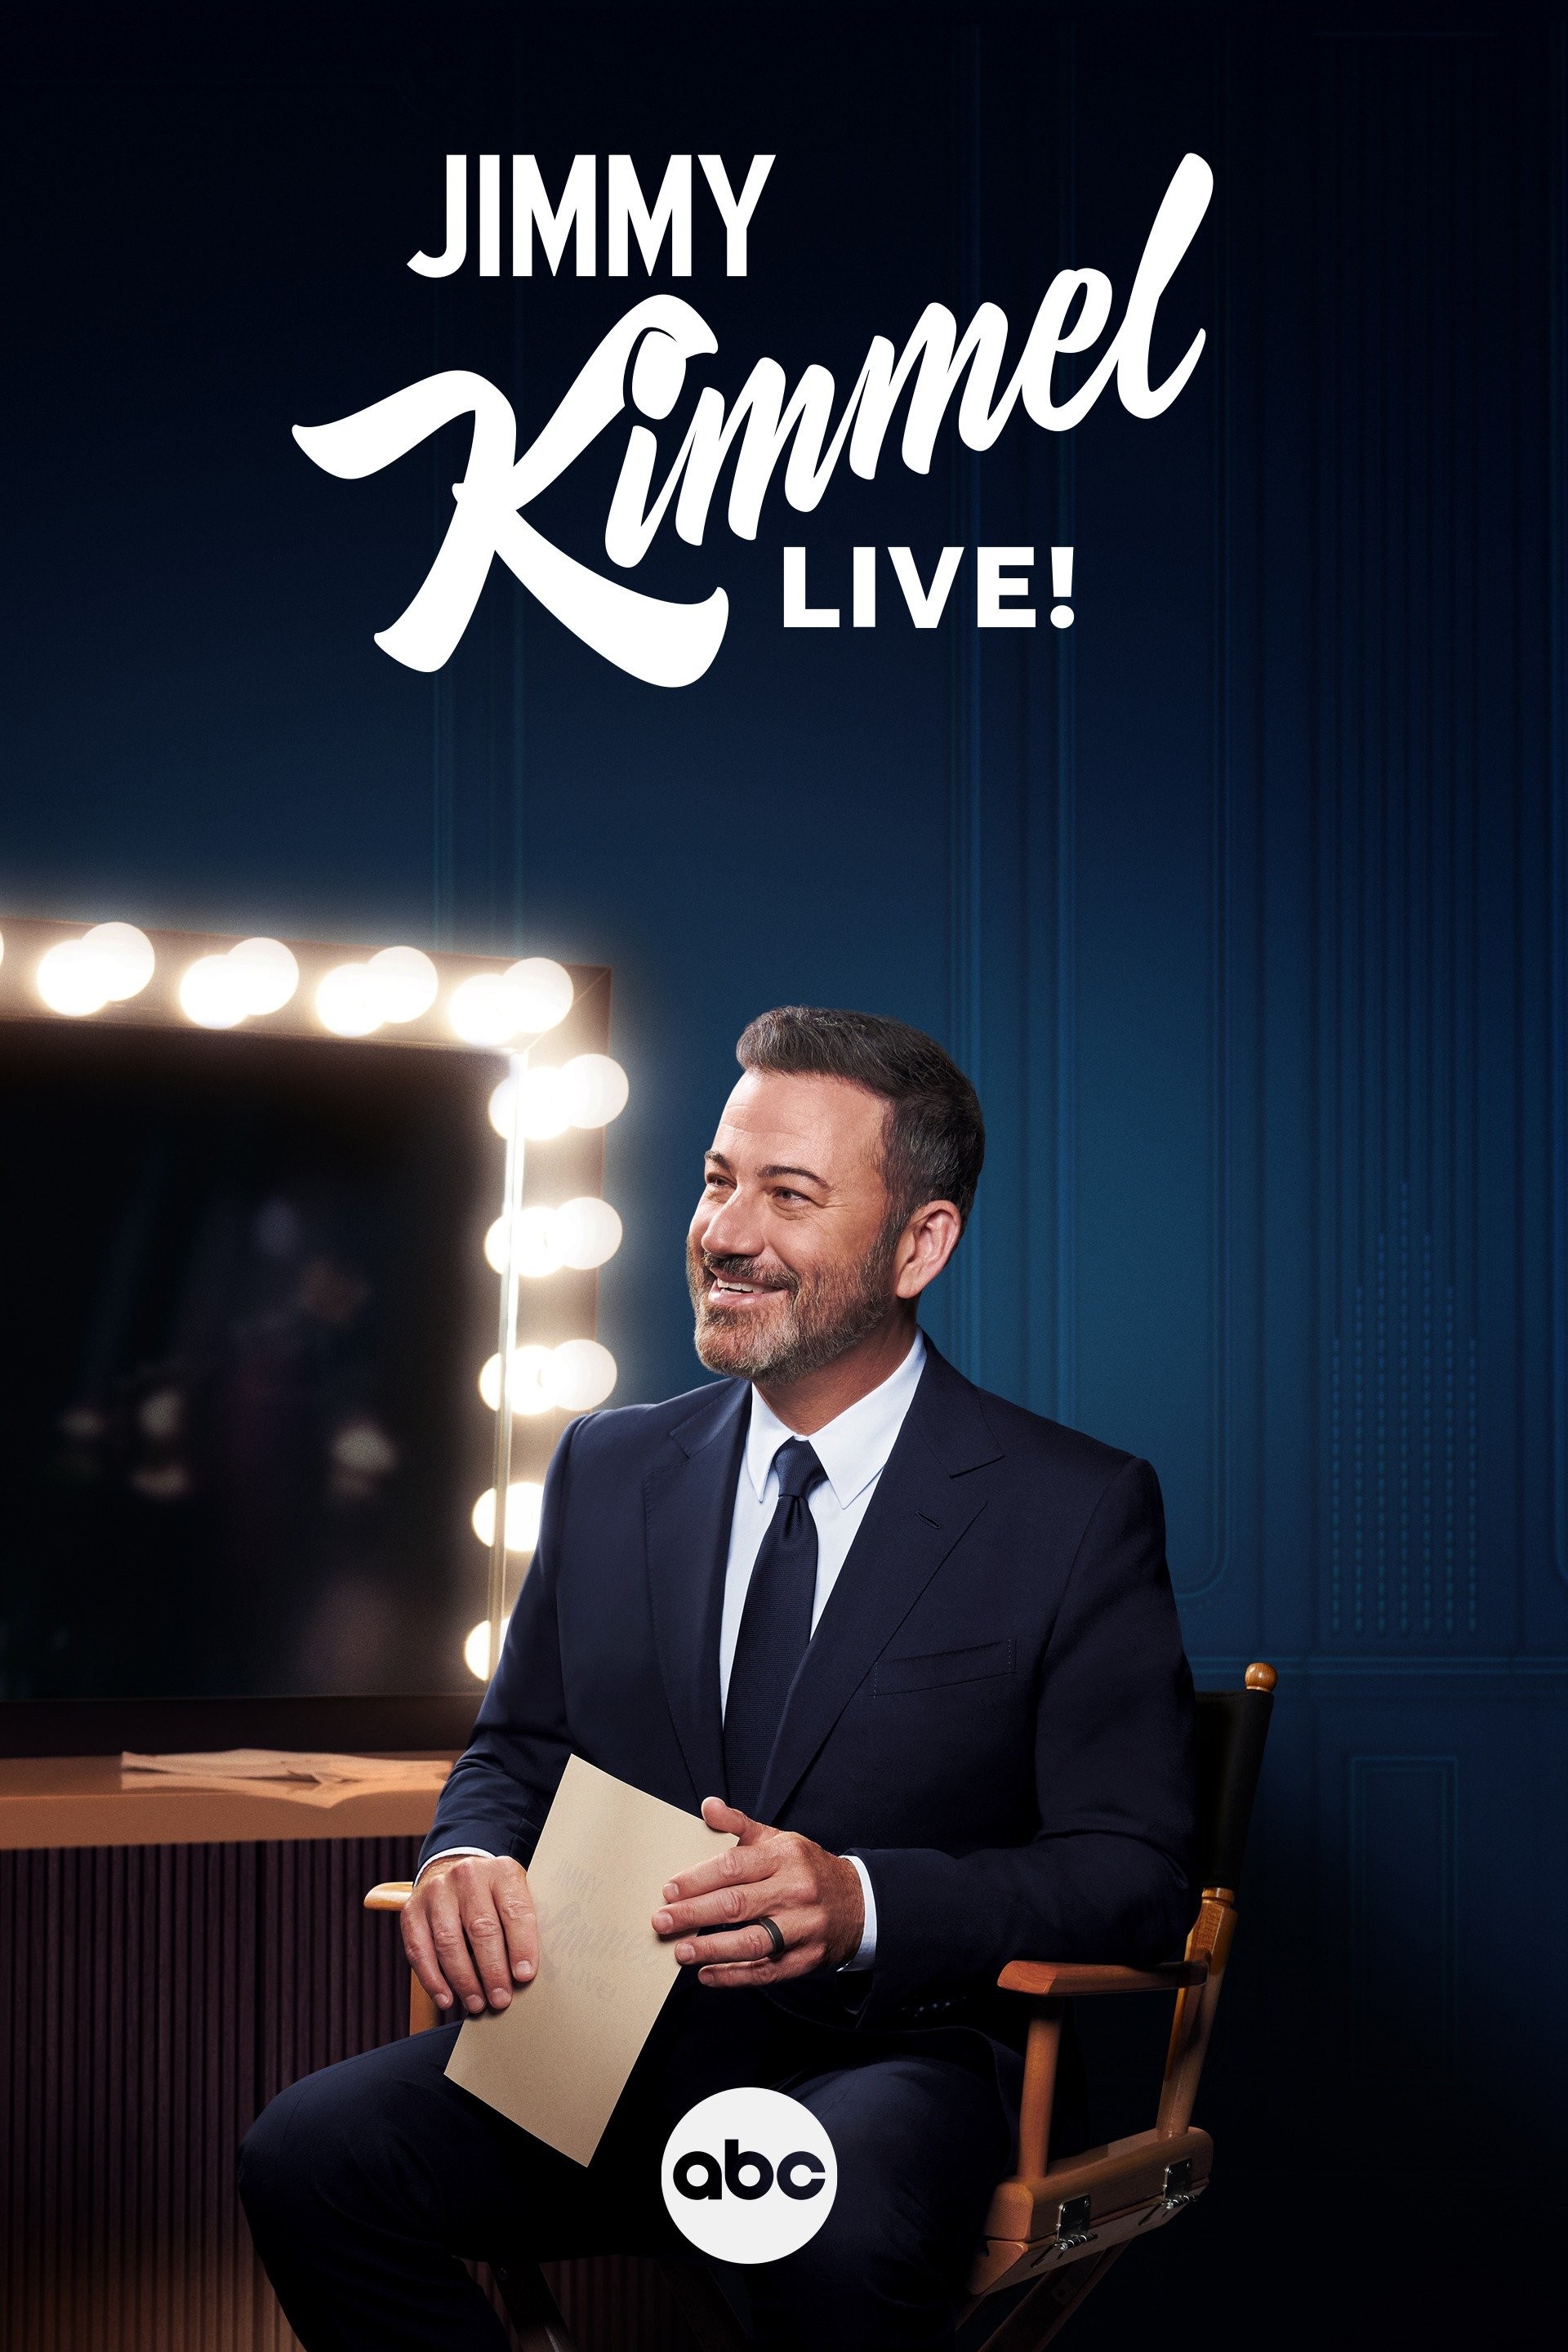 Sofia Vergara Heading to Jimmy Kimmel December 3, 2014 – Star Style